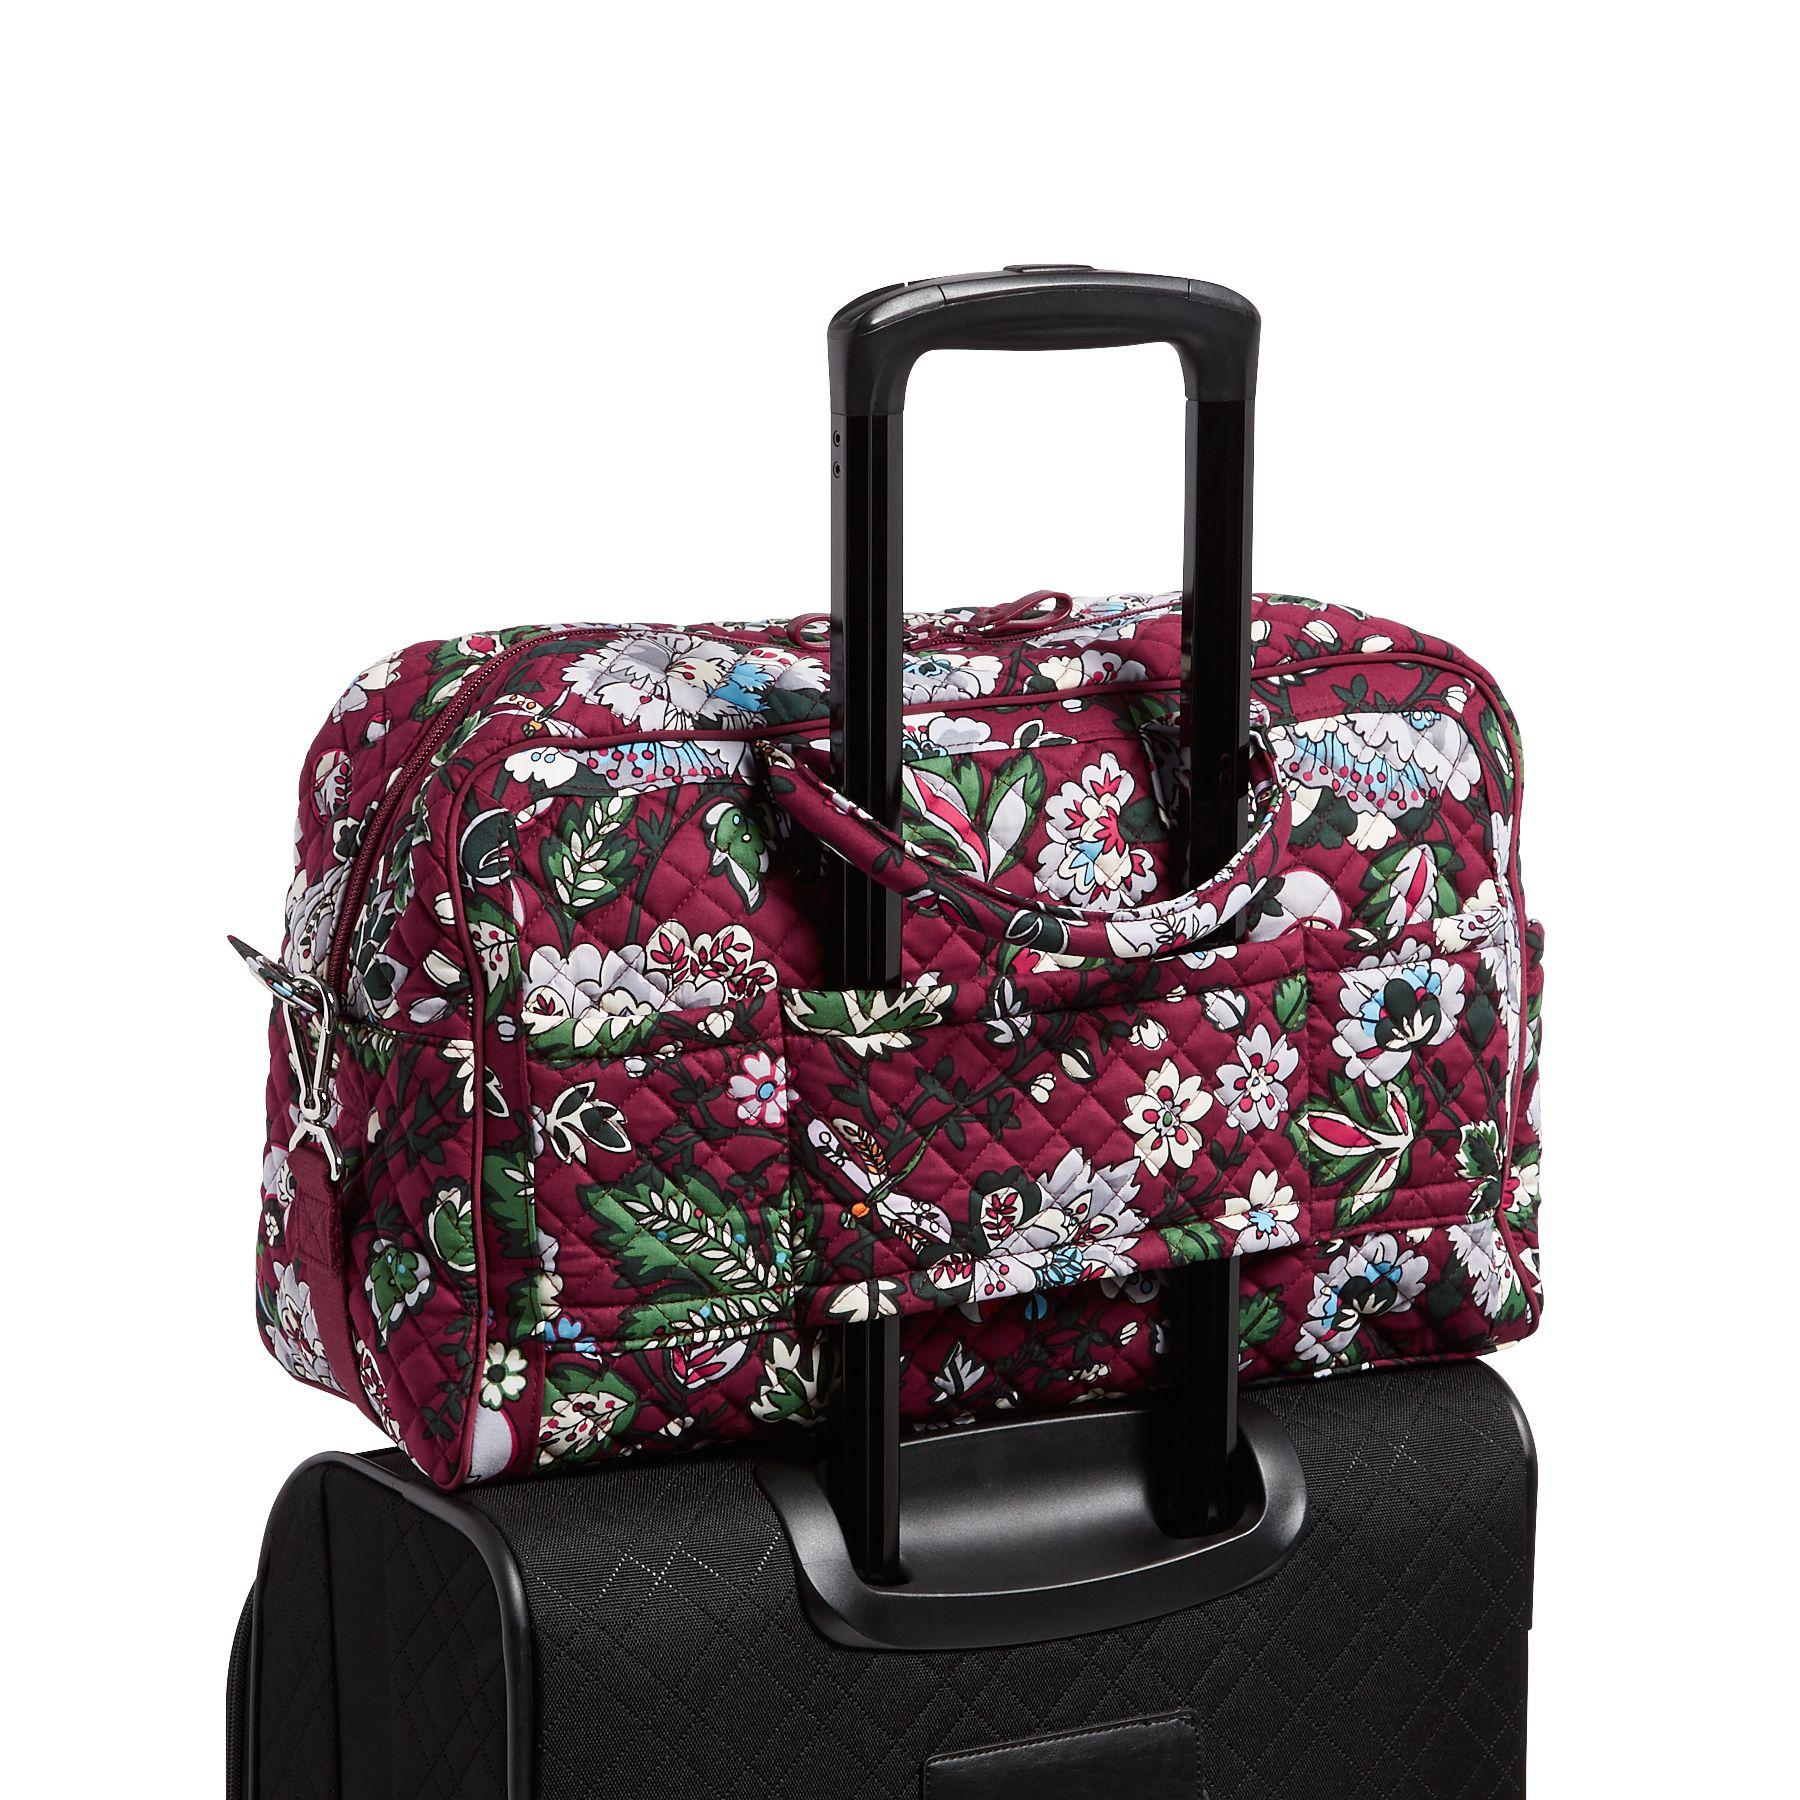 Lyst - Vera Bradley Iconic Compact Weekender Travel Bag